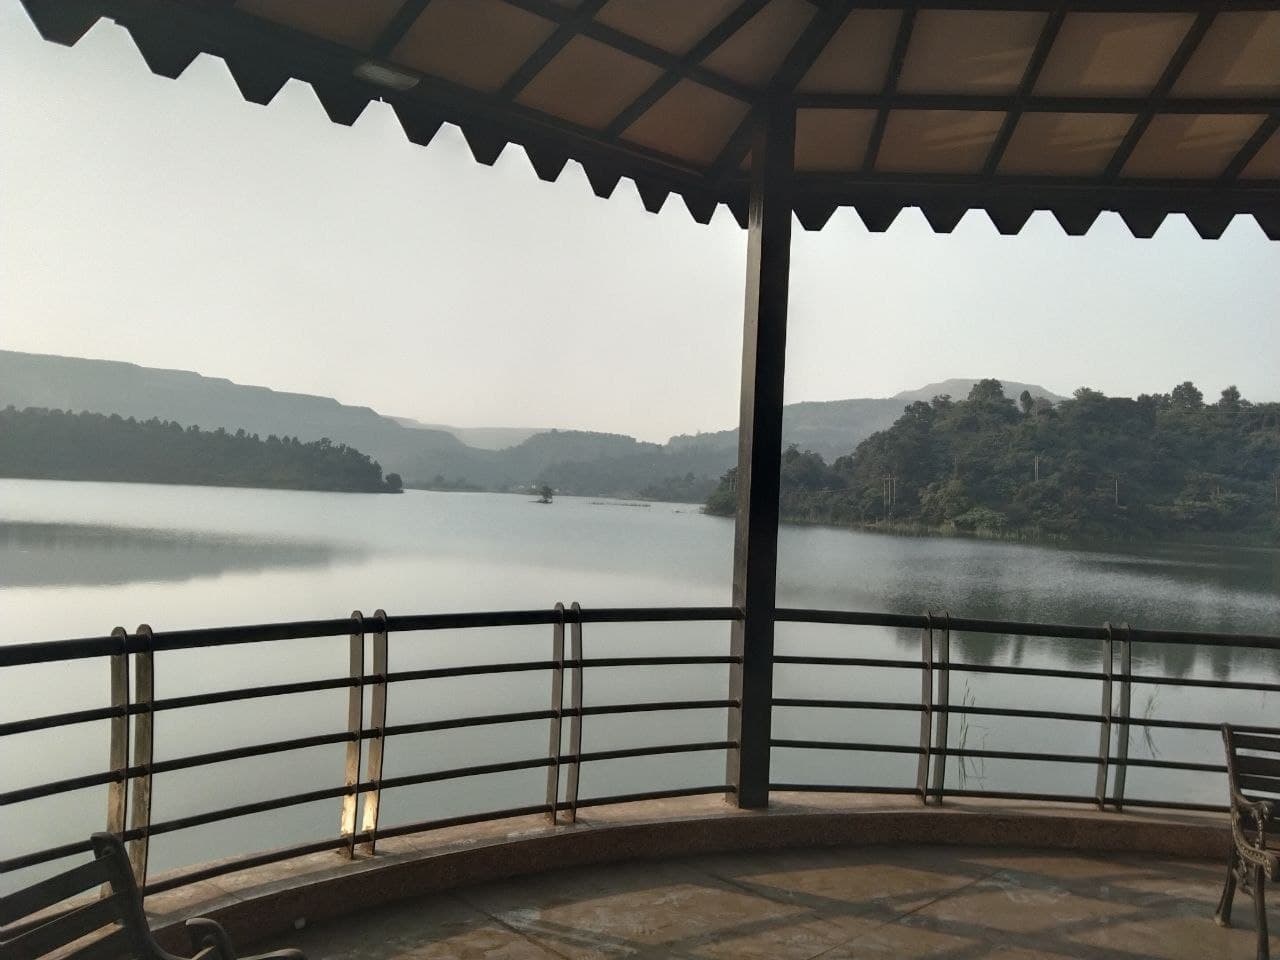 Singrauli Collector with help of NCL made Mudwani Dam tourist destination